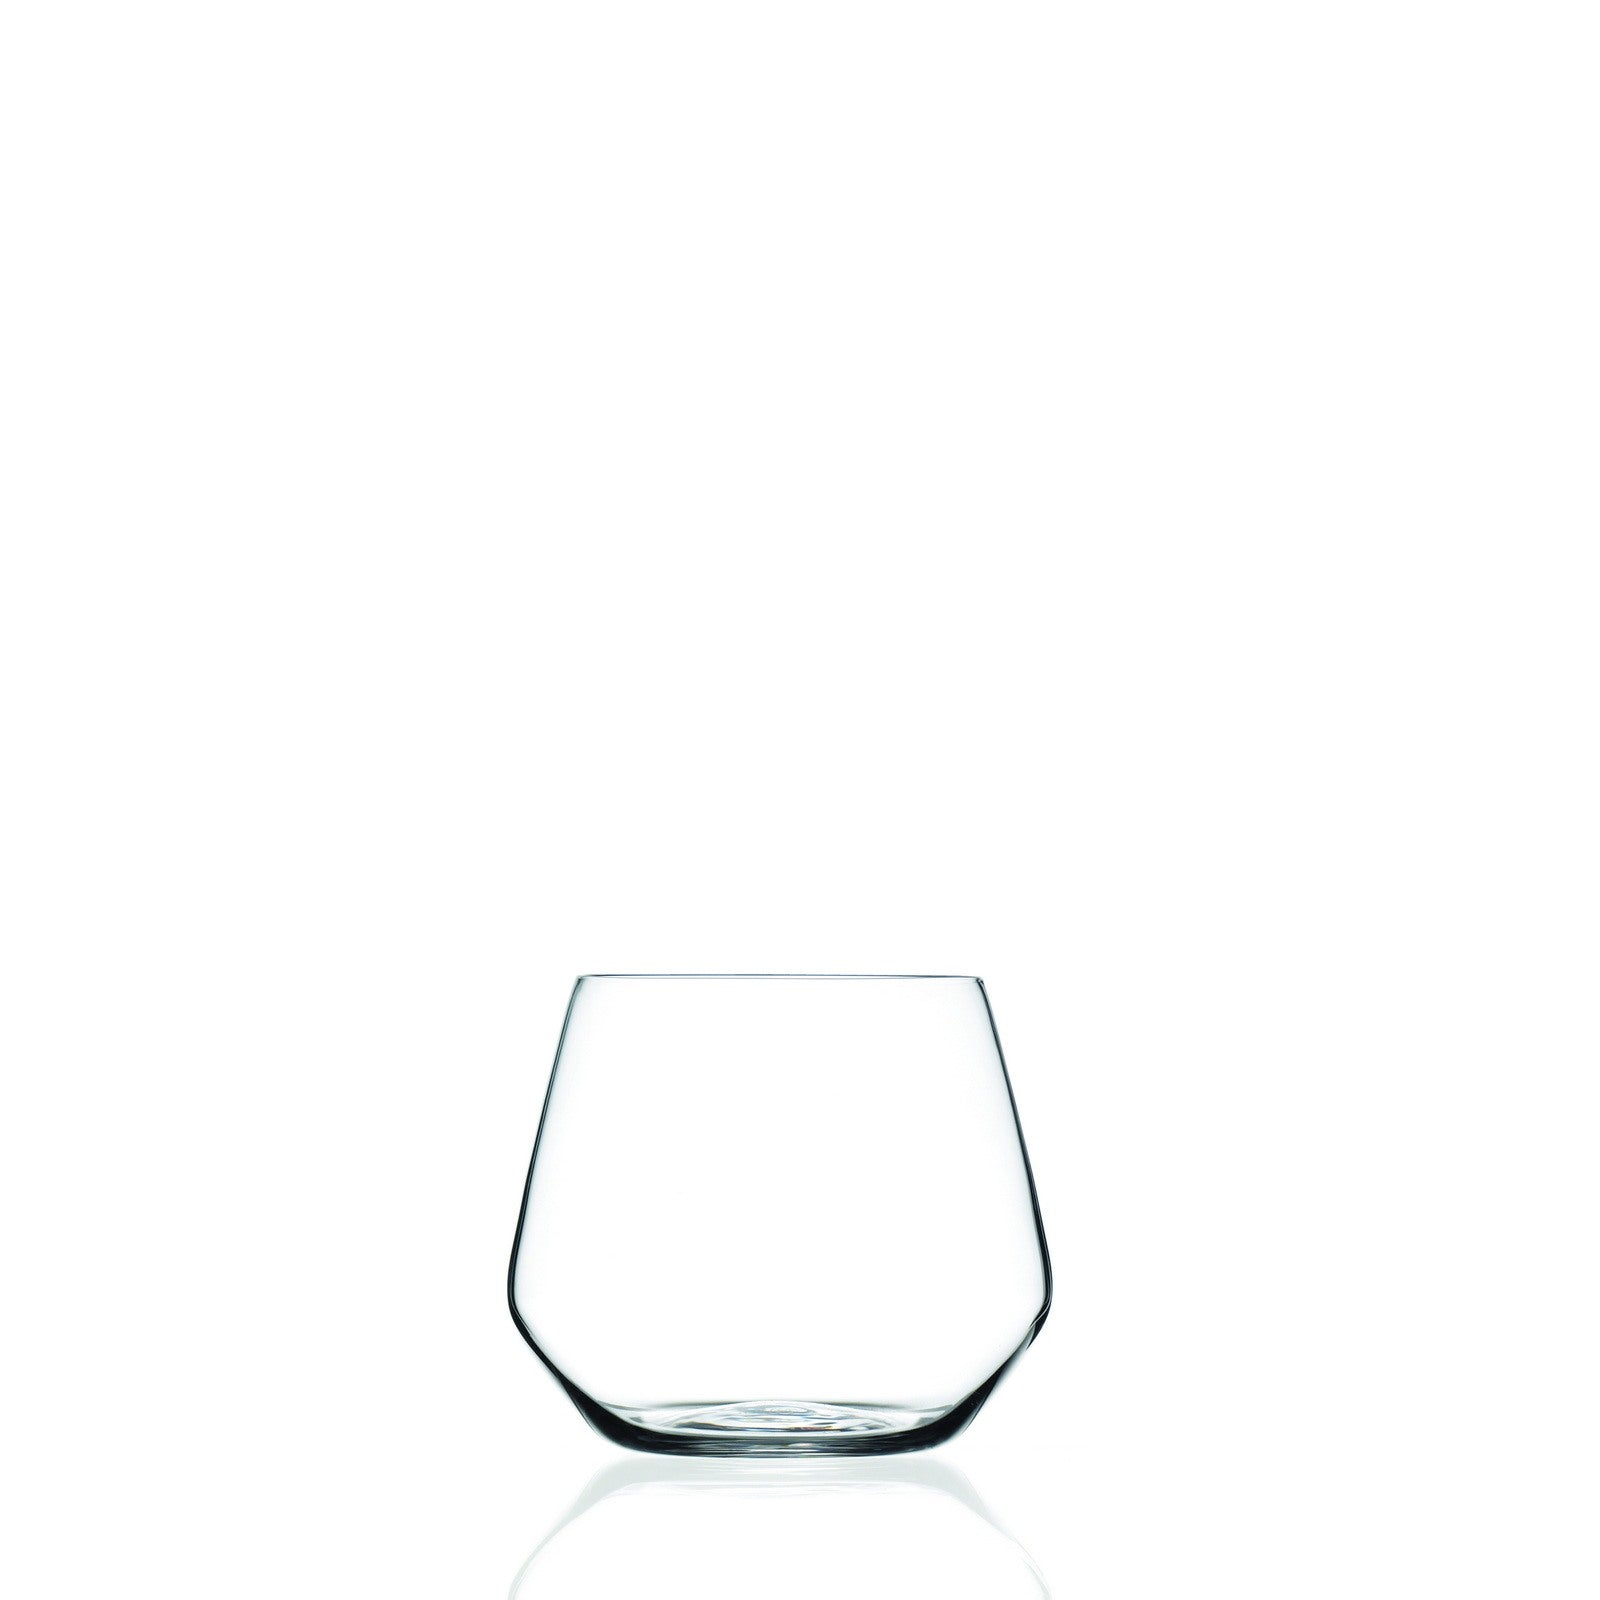 immagine-1-rcr-cristalleria-italiana-aria-a55-set-da-6-bicchieri-in-vetro